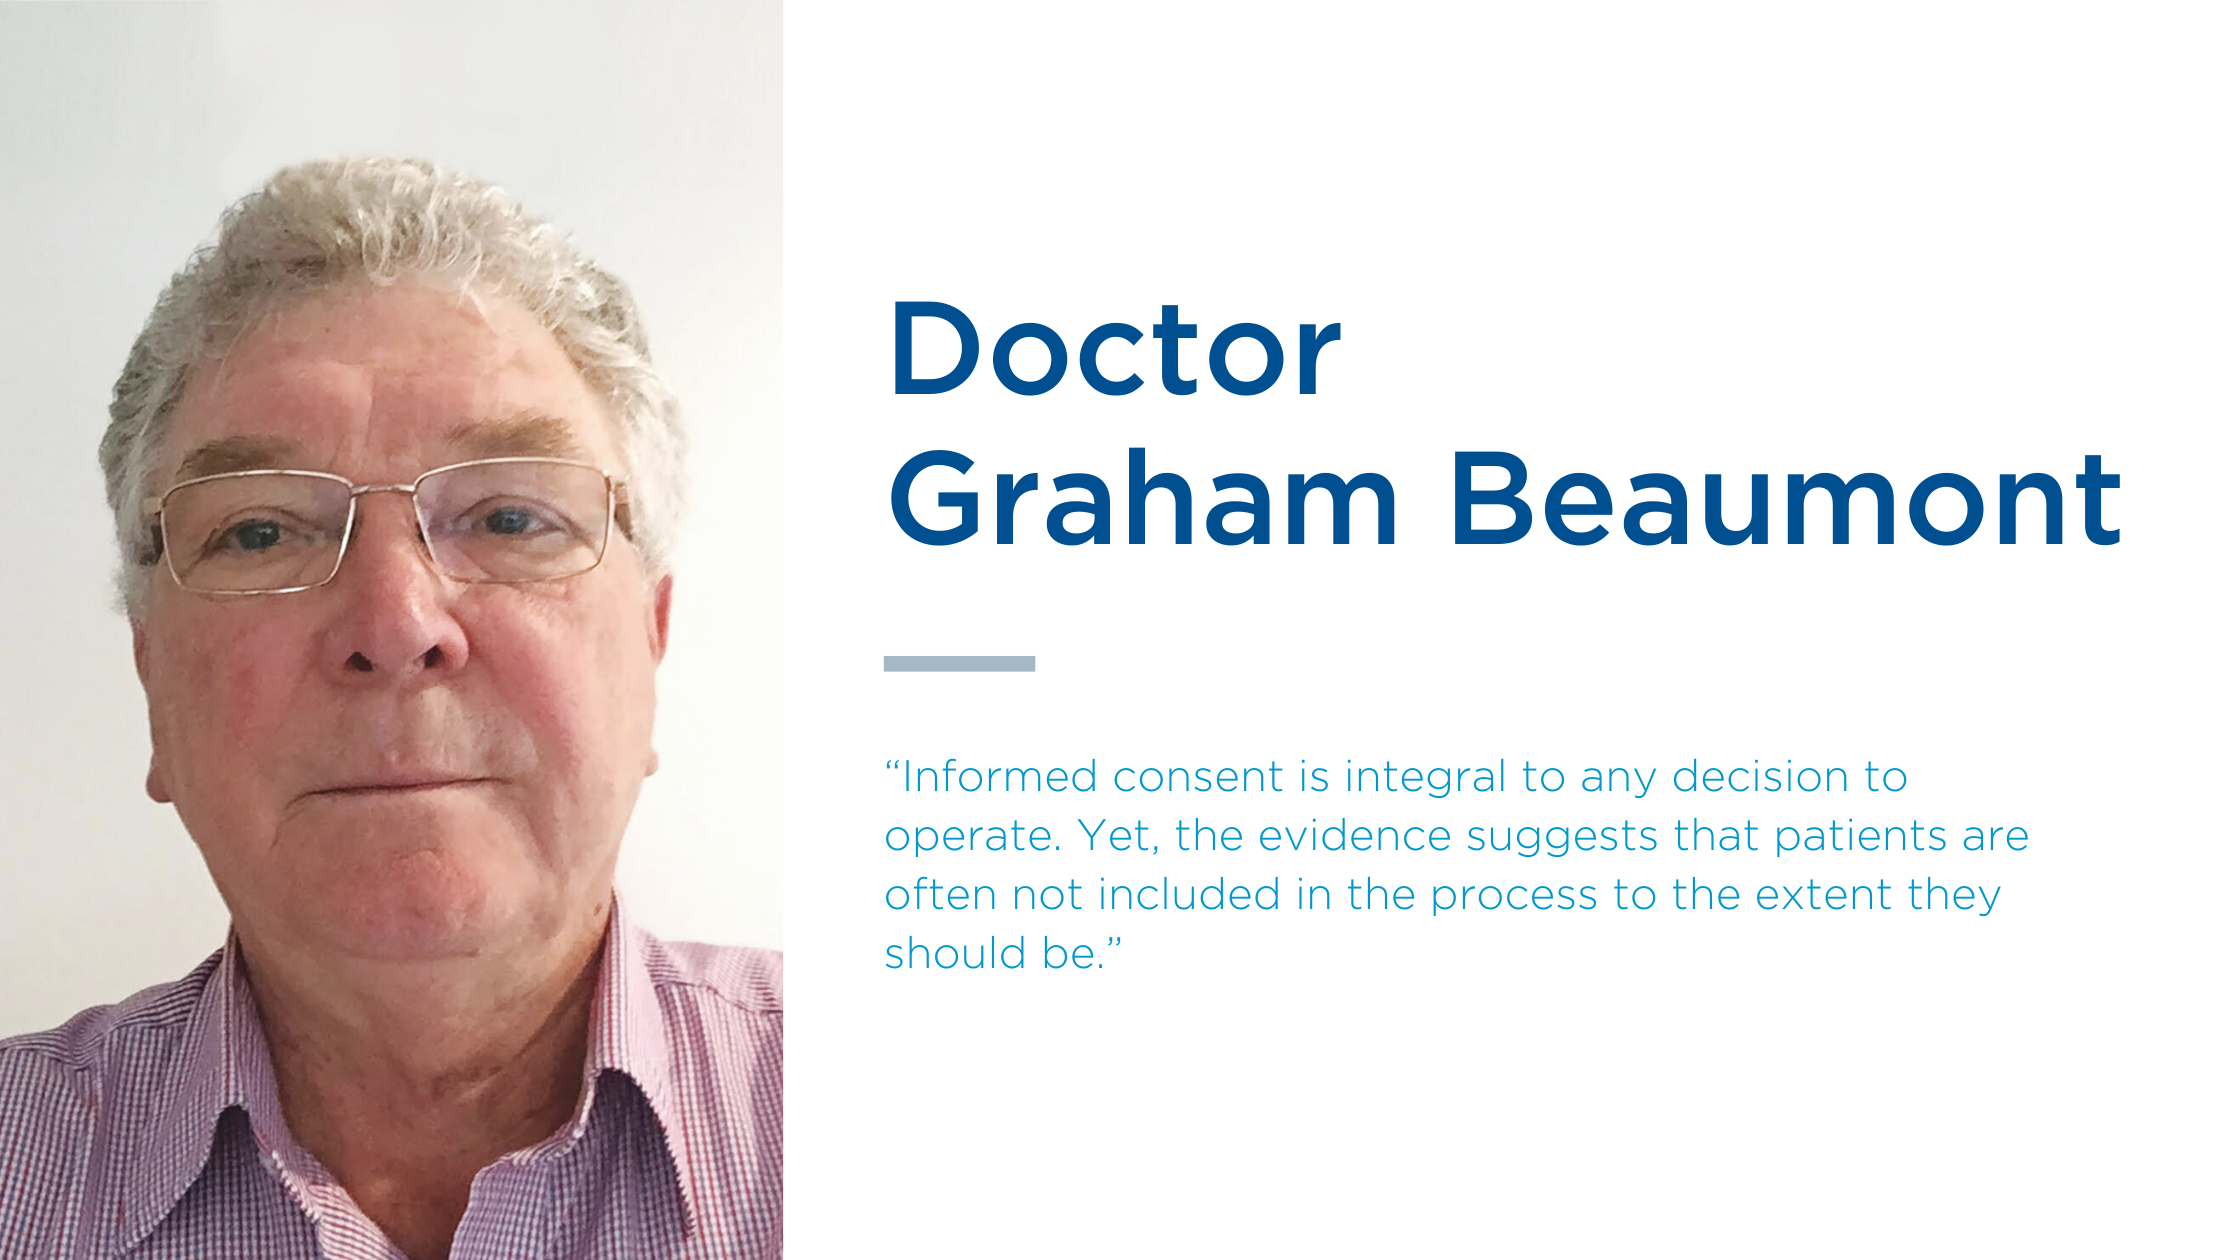 Dr Graham Beaumont explains how to gain informed patient consent to minimise risk